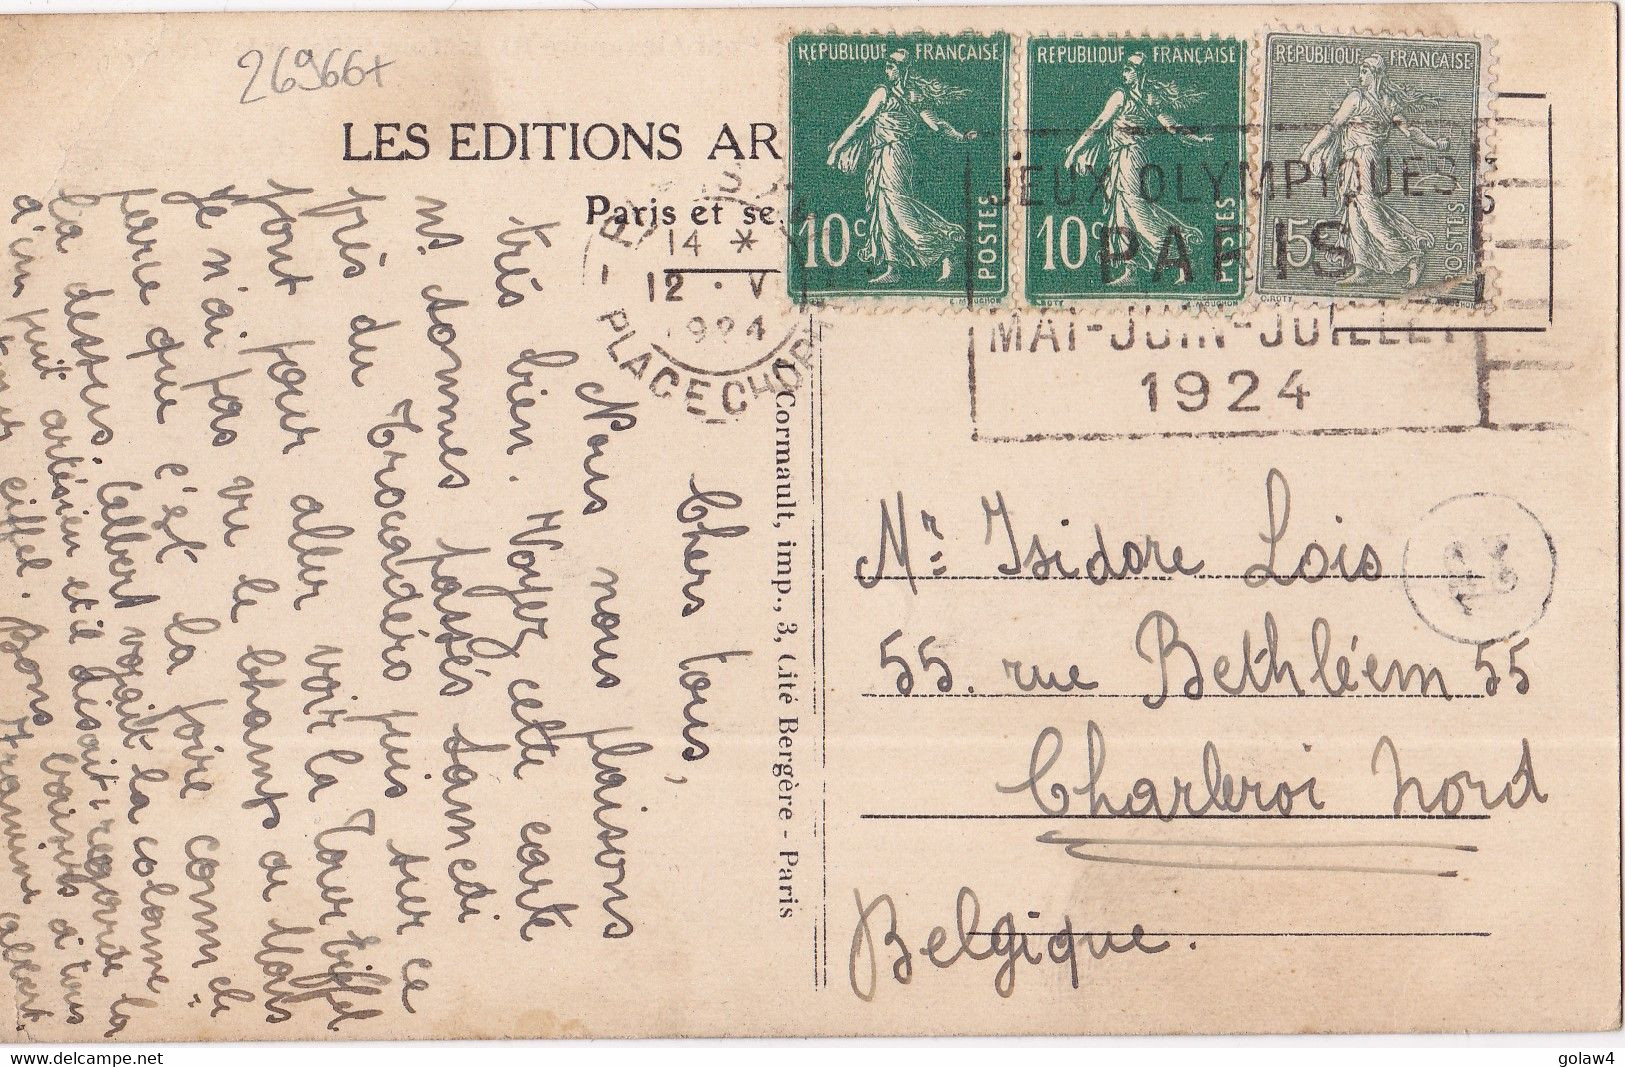 26966# CARTE POSTALE Obl PARIS XVI PLACE CHOPIN 12 V 1924 JEUX OLYMPIQUES MAI JUIN JUILLET OMEC OLYMPICS GAMES CHARLEROI - Estate 1924: Paris